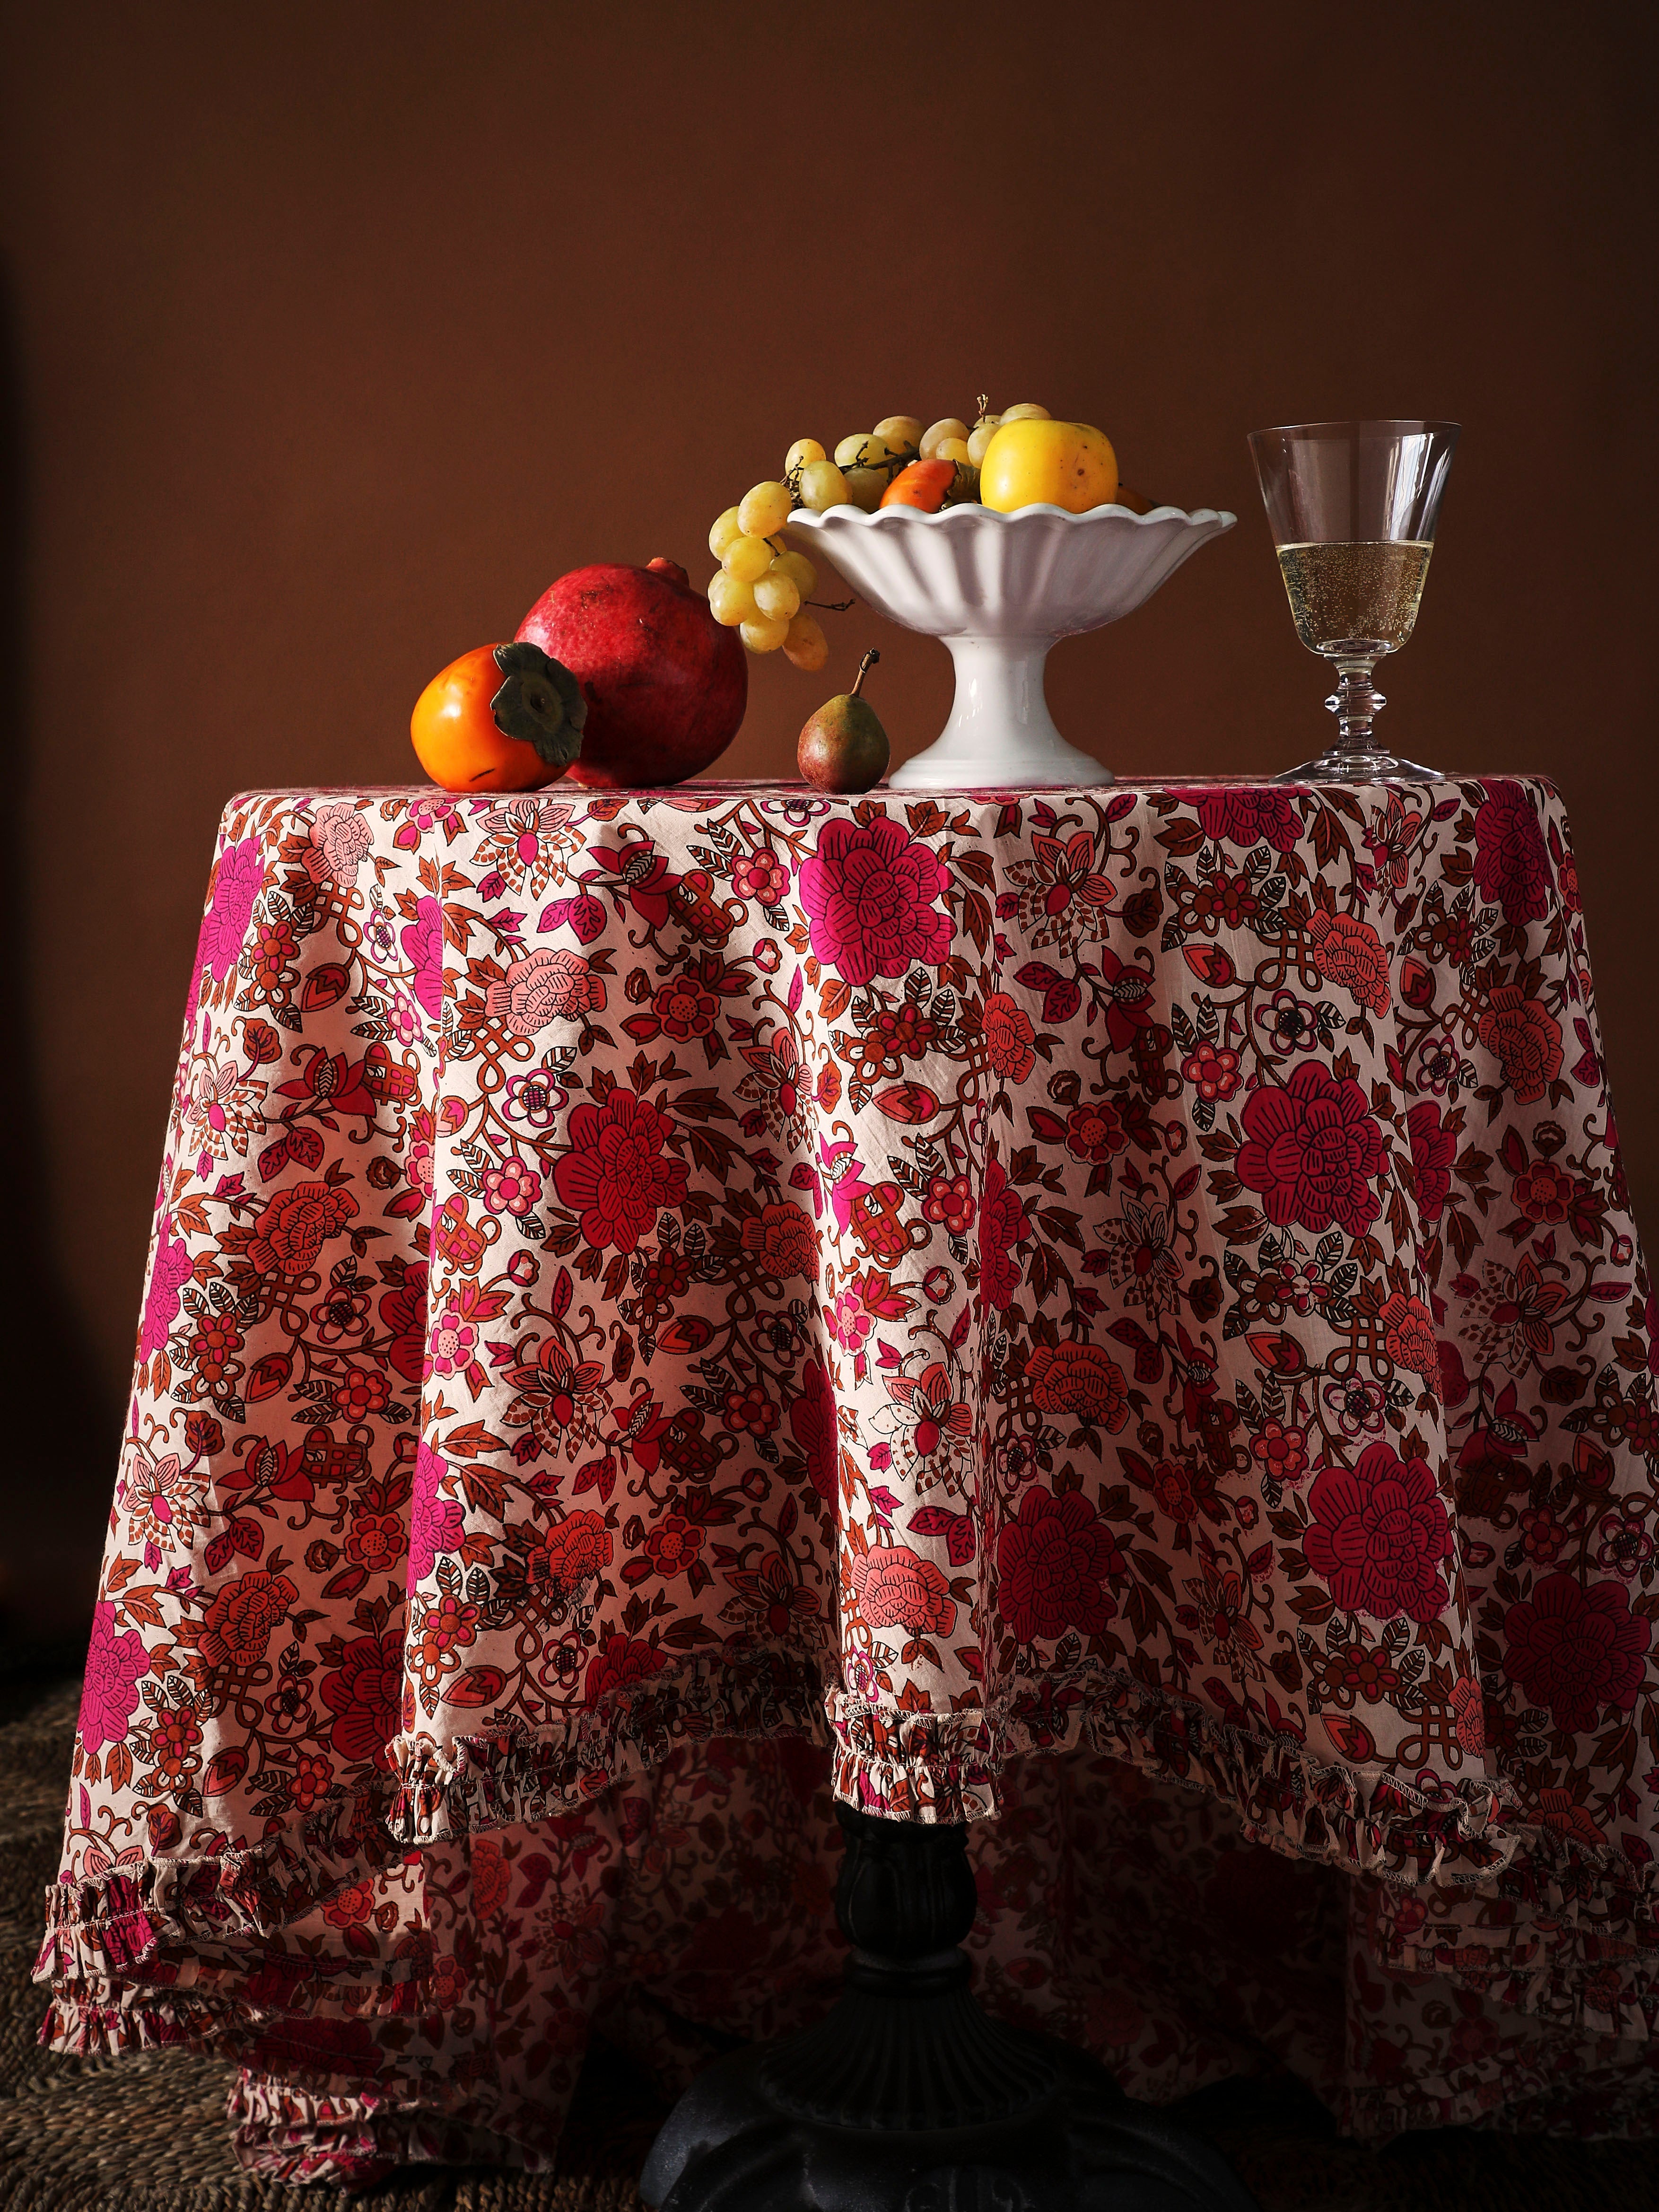 MILLE Home & Garden Cocktail Tablecloth in Pondicherry